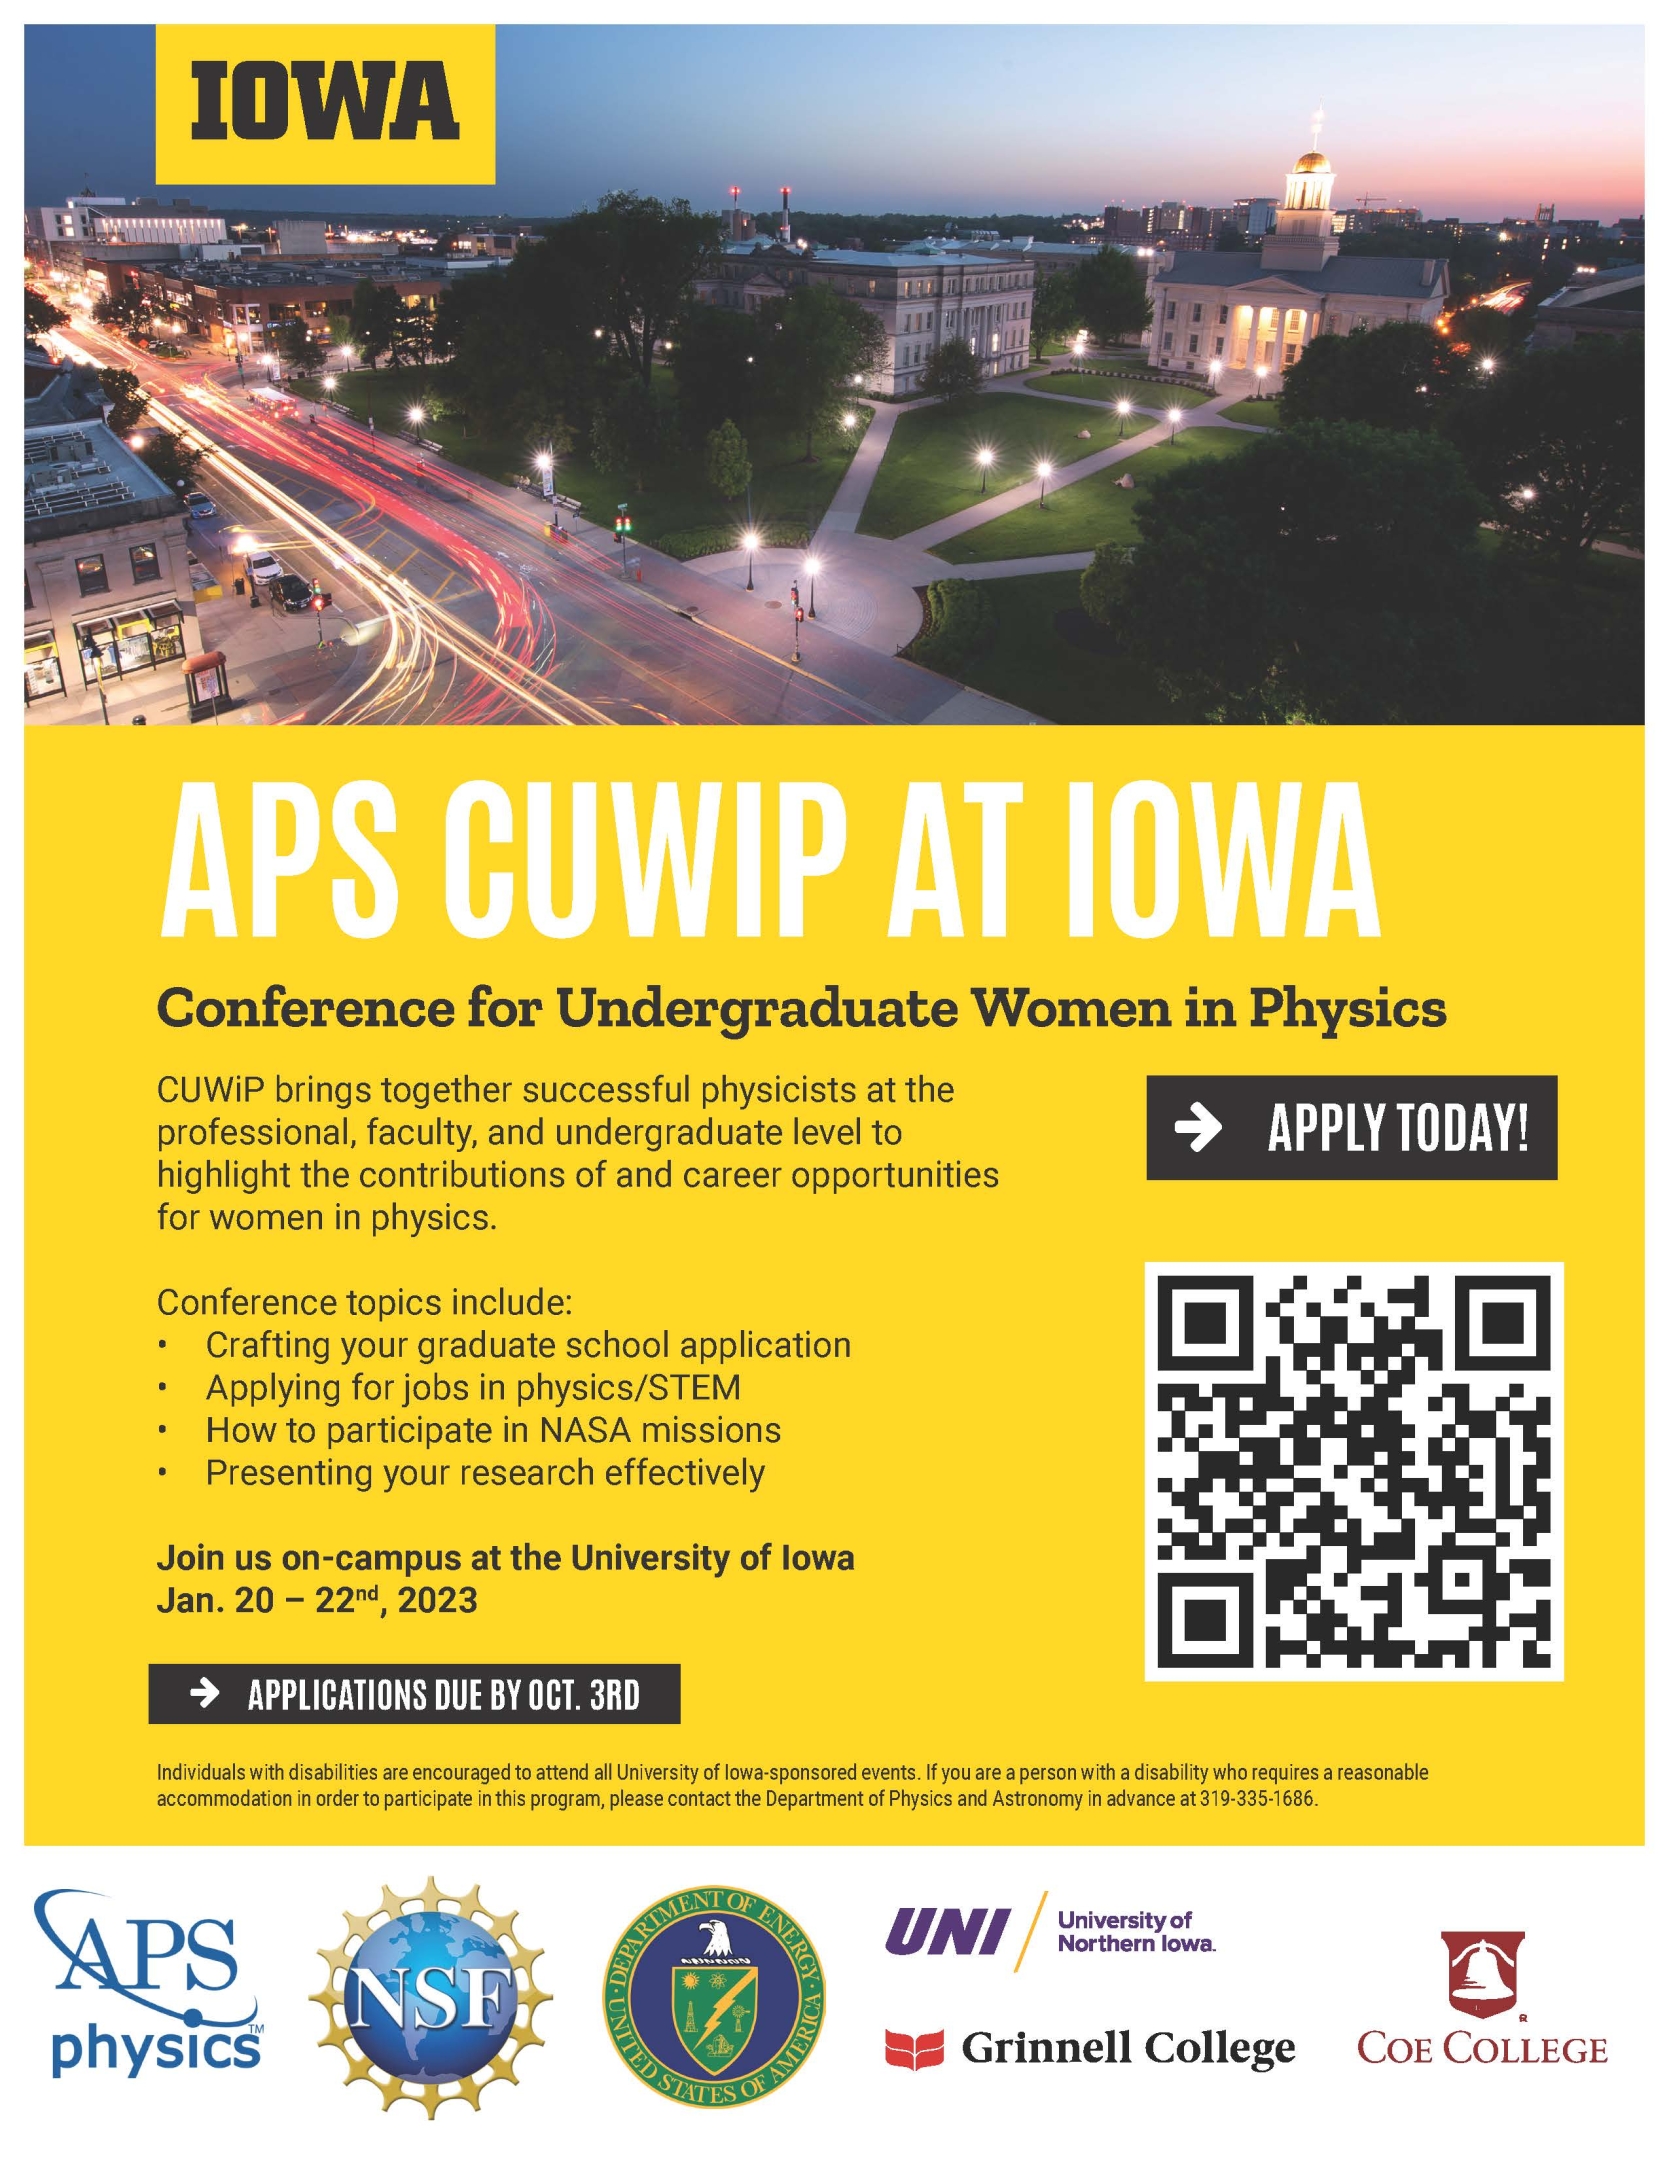 2023 Conference for Undergraduate Women in Physics (CUWiP) @ Iowa